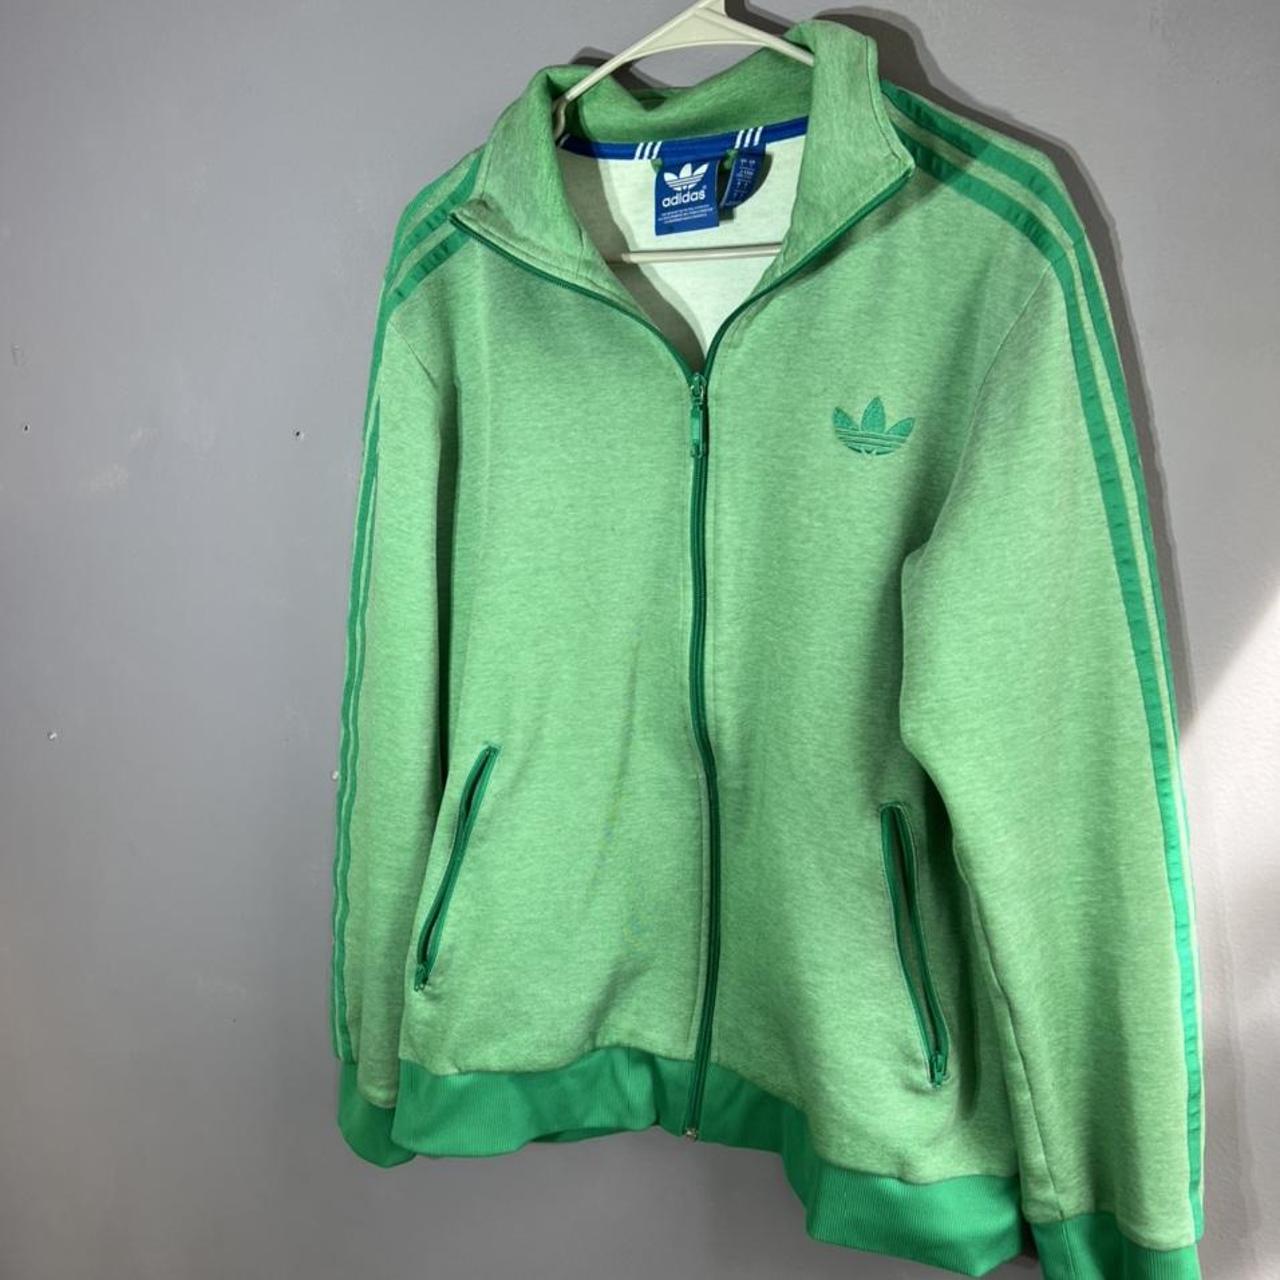 Adidas Originals Men's Green and White Jacket | Depop